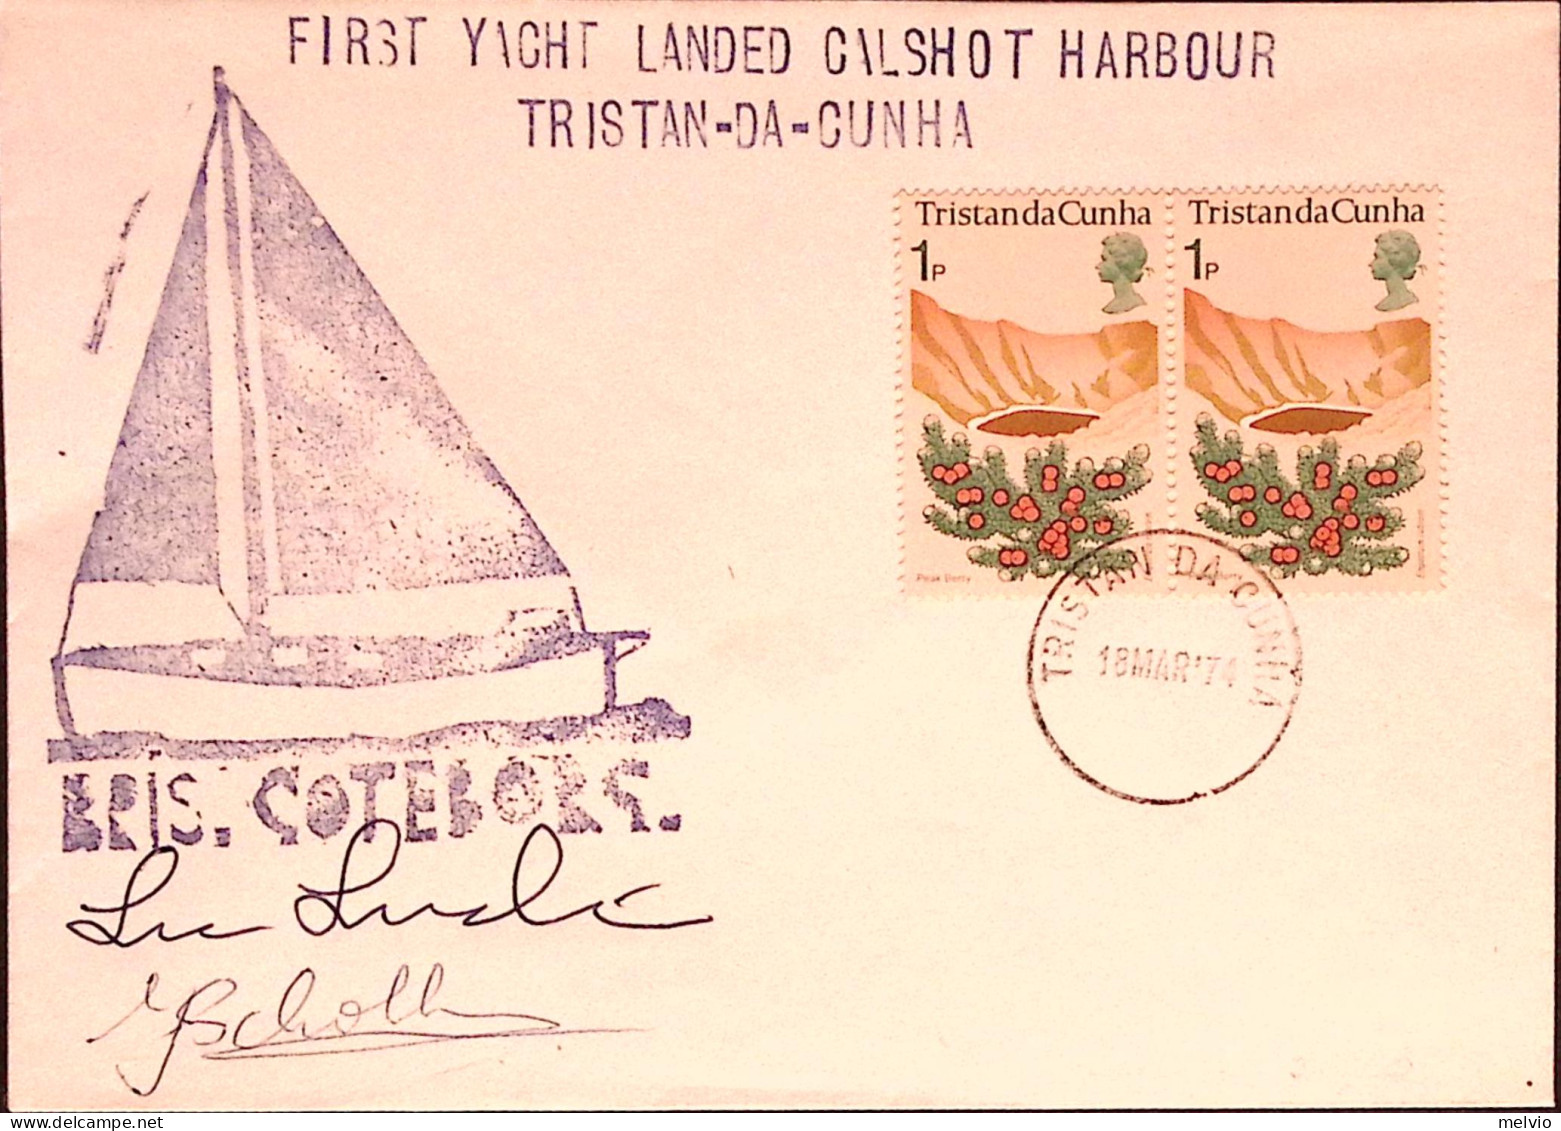 1974-TRISTAN da CUNHA 1 Yacht landed Calshot Harbour (18.3) annullo speciale su 